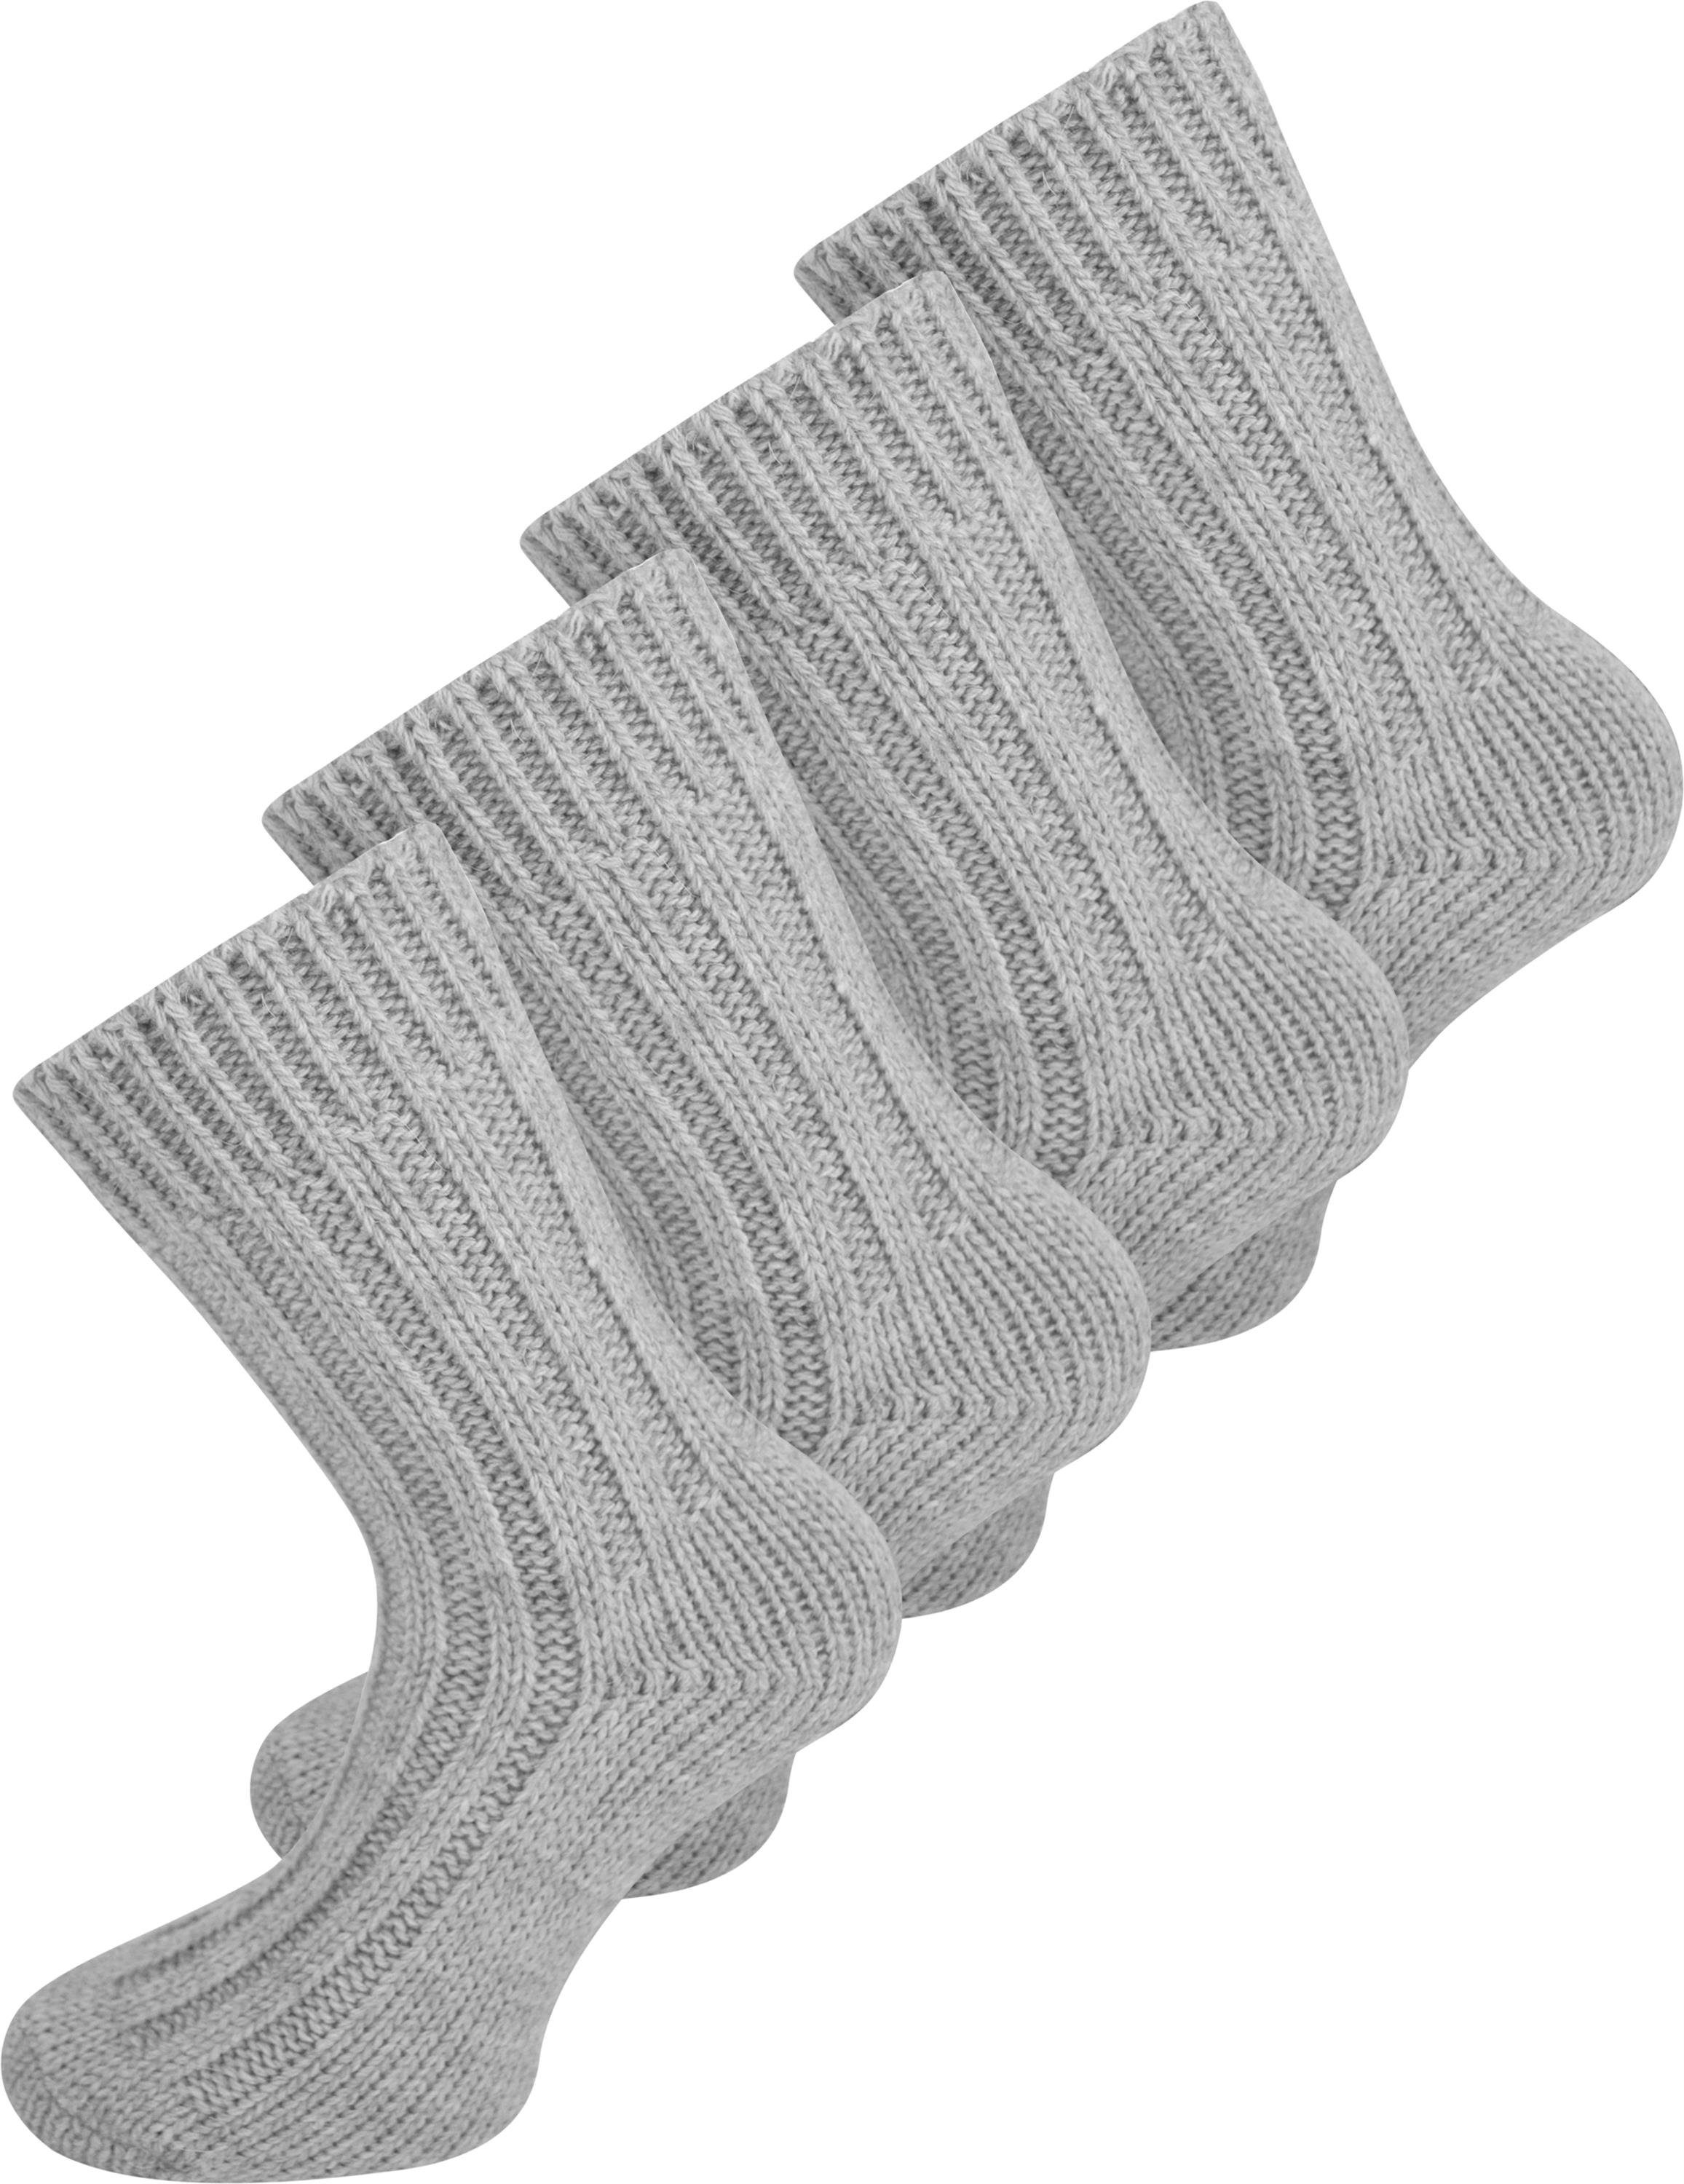 Alpaka-Wolle 4 Paar normani (4 Hellgrau hochwertige Alpaka-Socken Paar) Thermosocken